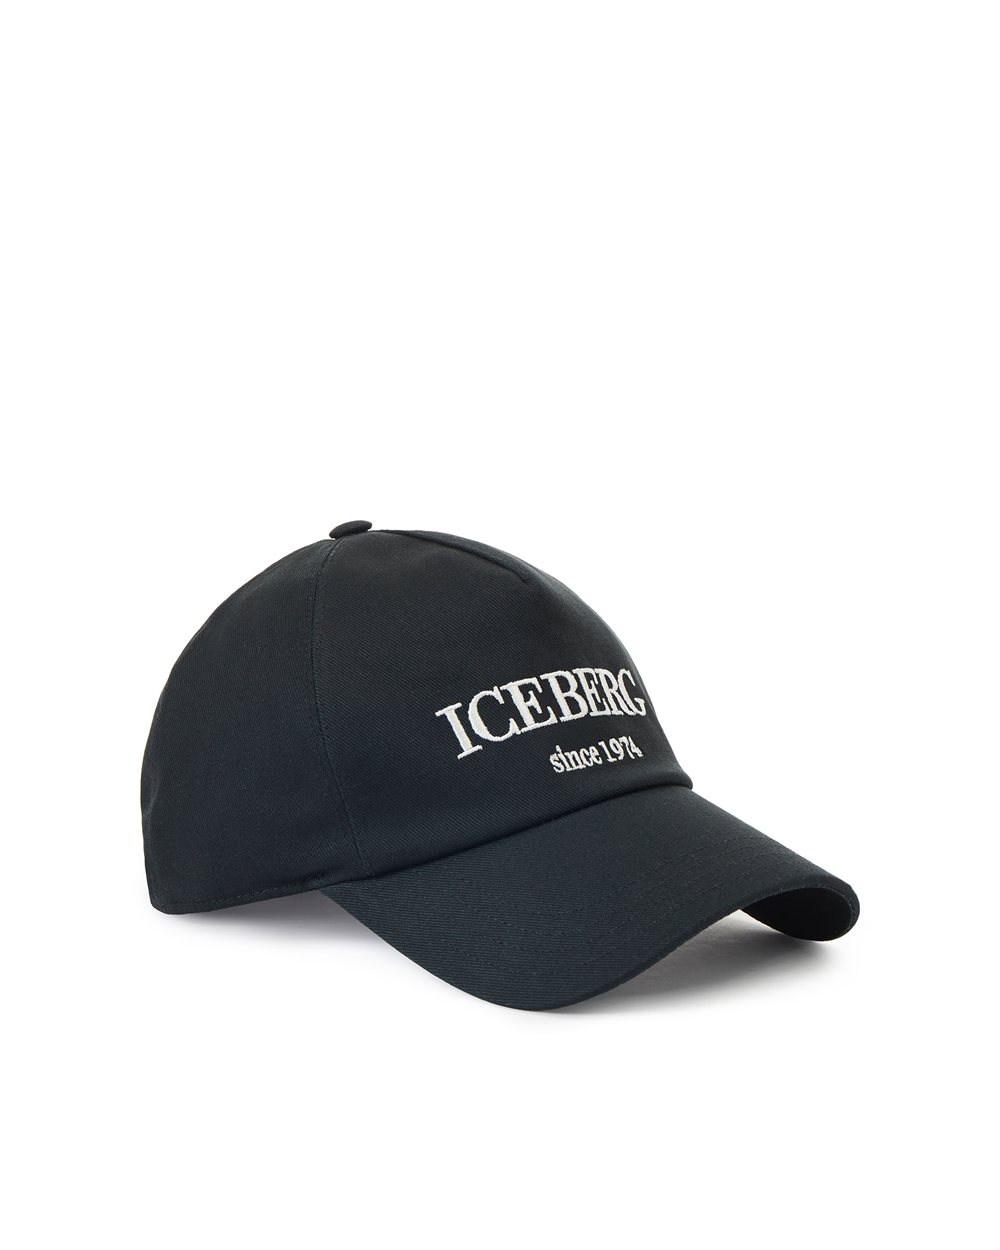 Baseball hat with logo - Hats  | Iceberg - Official Website